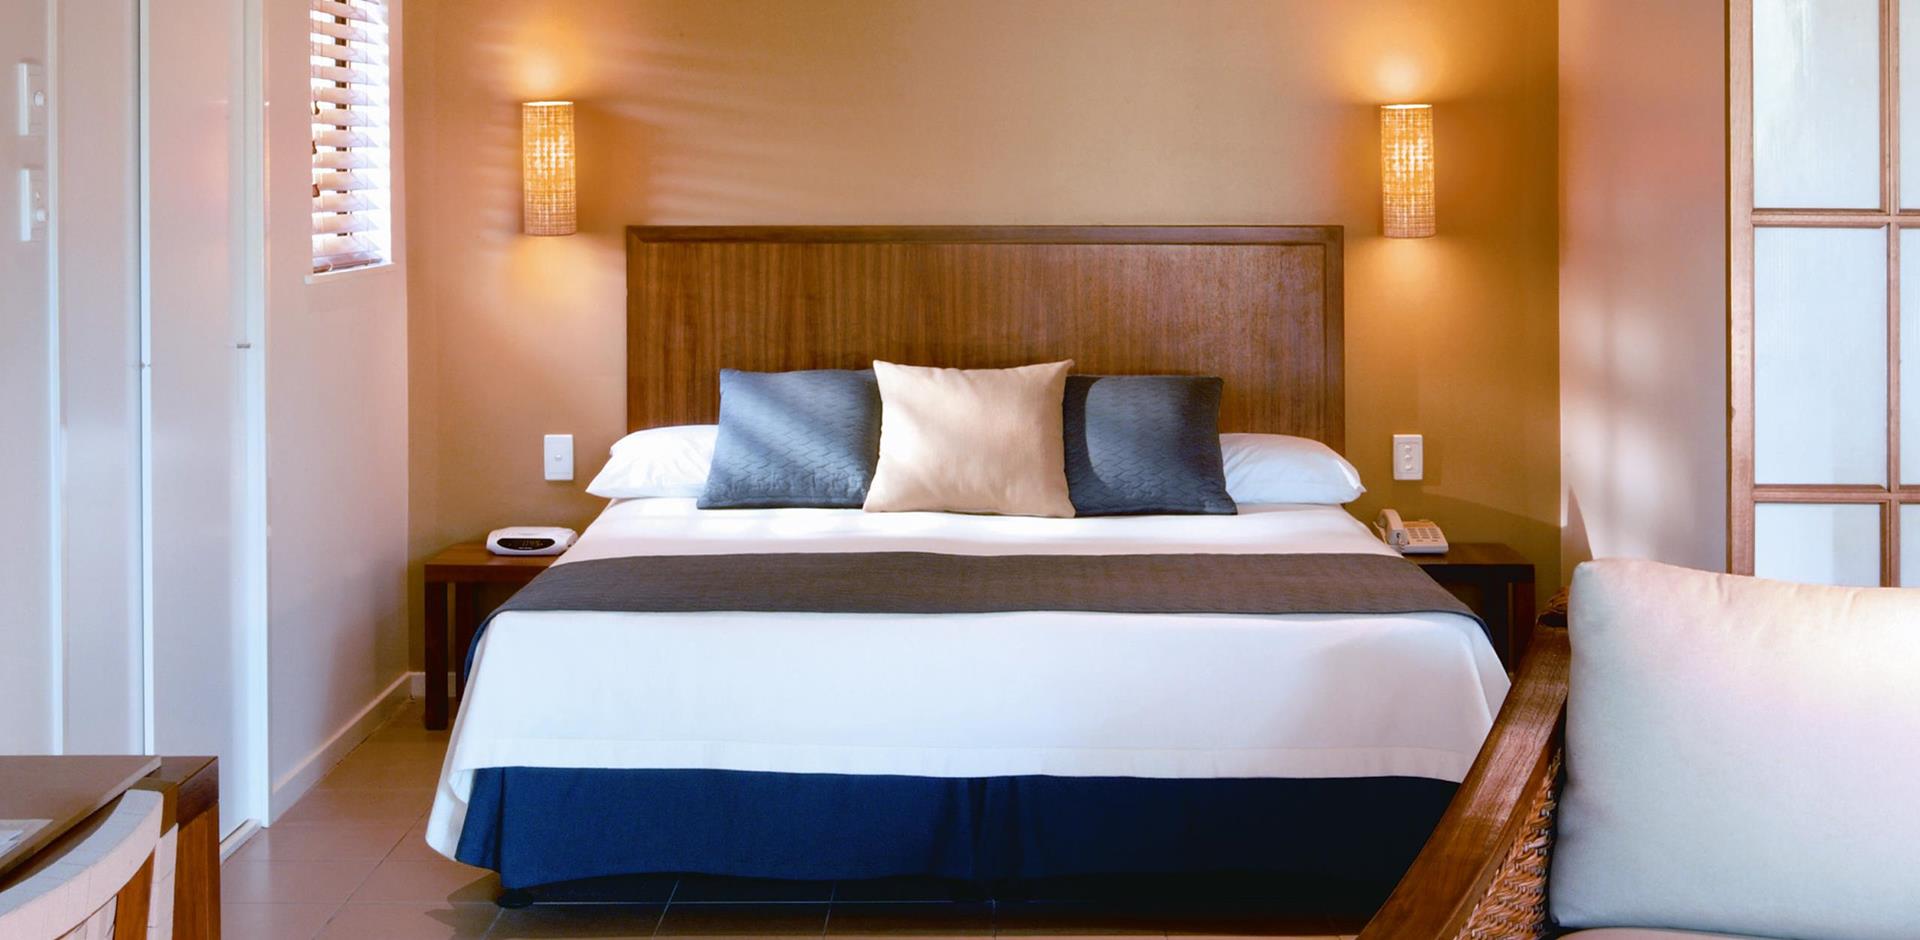 Bedroom, Heron Island Resort, Australia